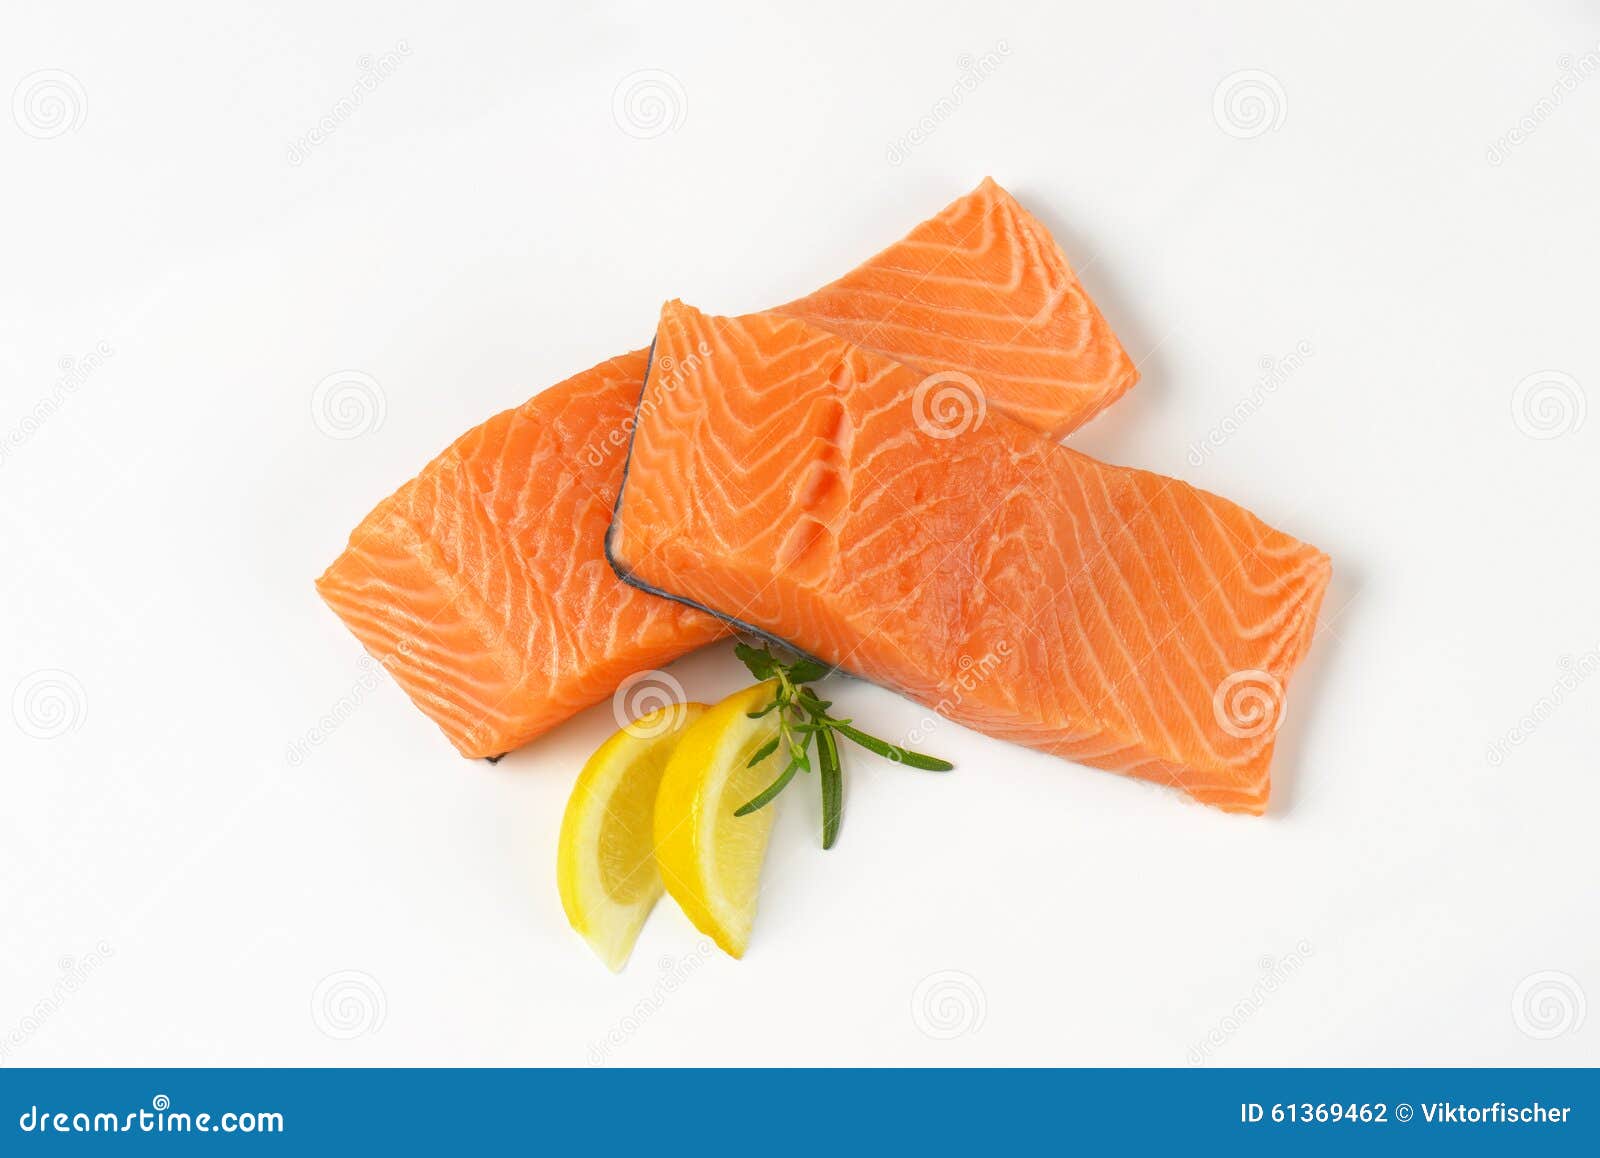 Raw salmon fillets stock photo. Image of rosemary, omega3 - 61369462